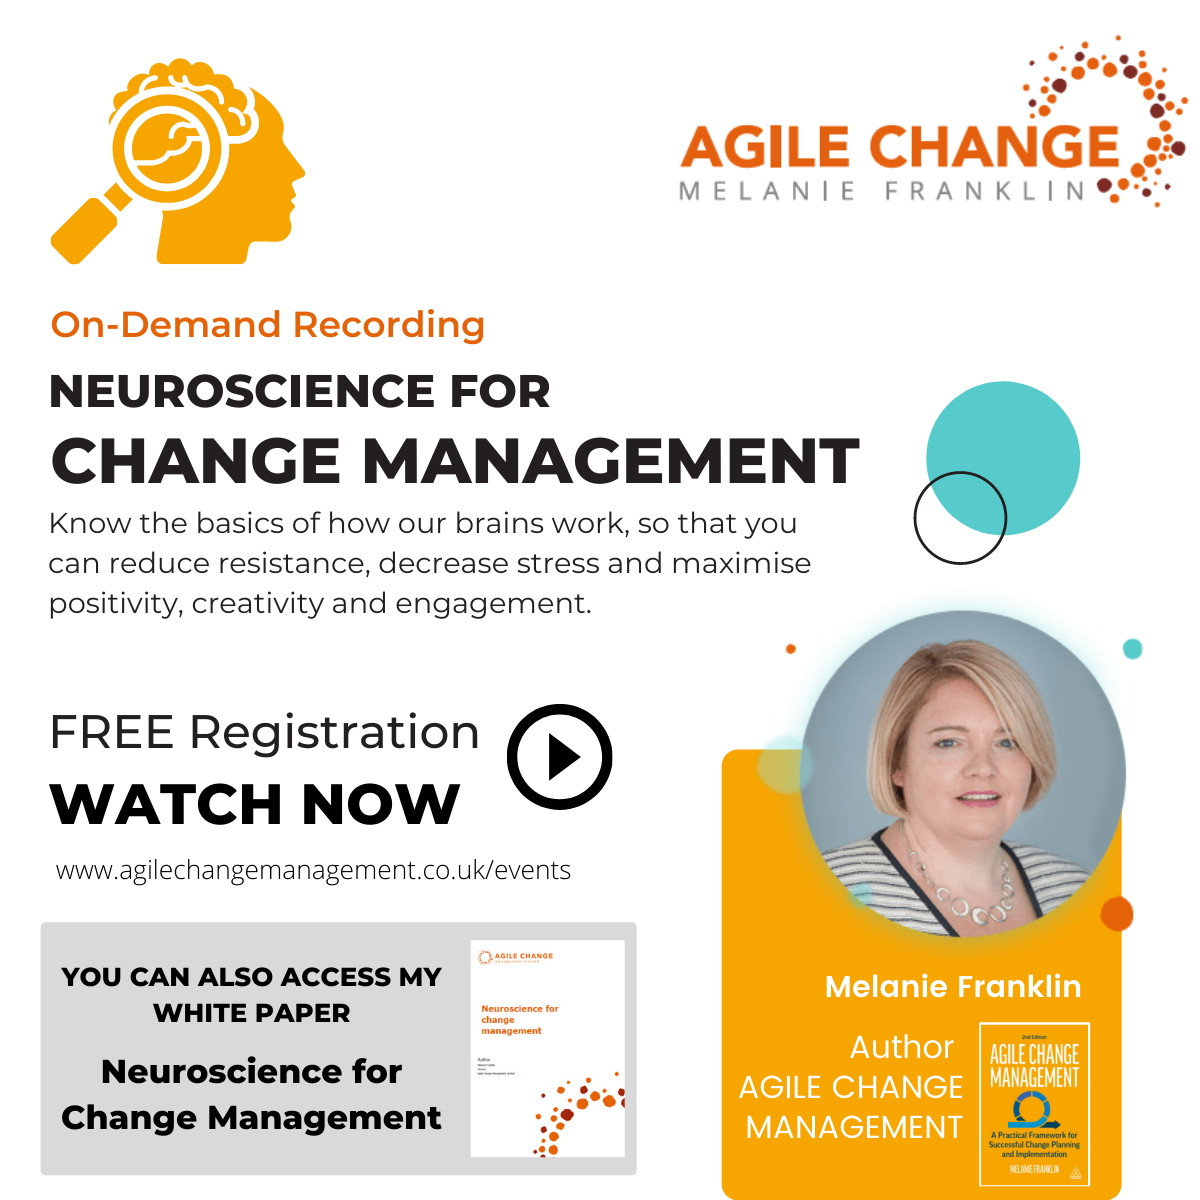 On Demanding Recording Neuroscience for Change Management Webinar with Melanie Franklin